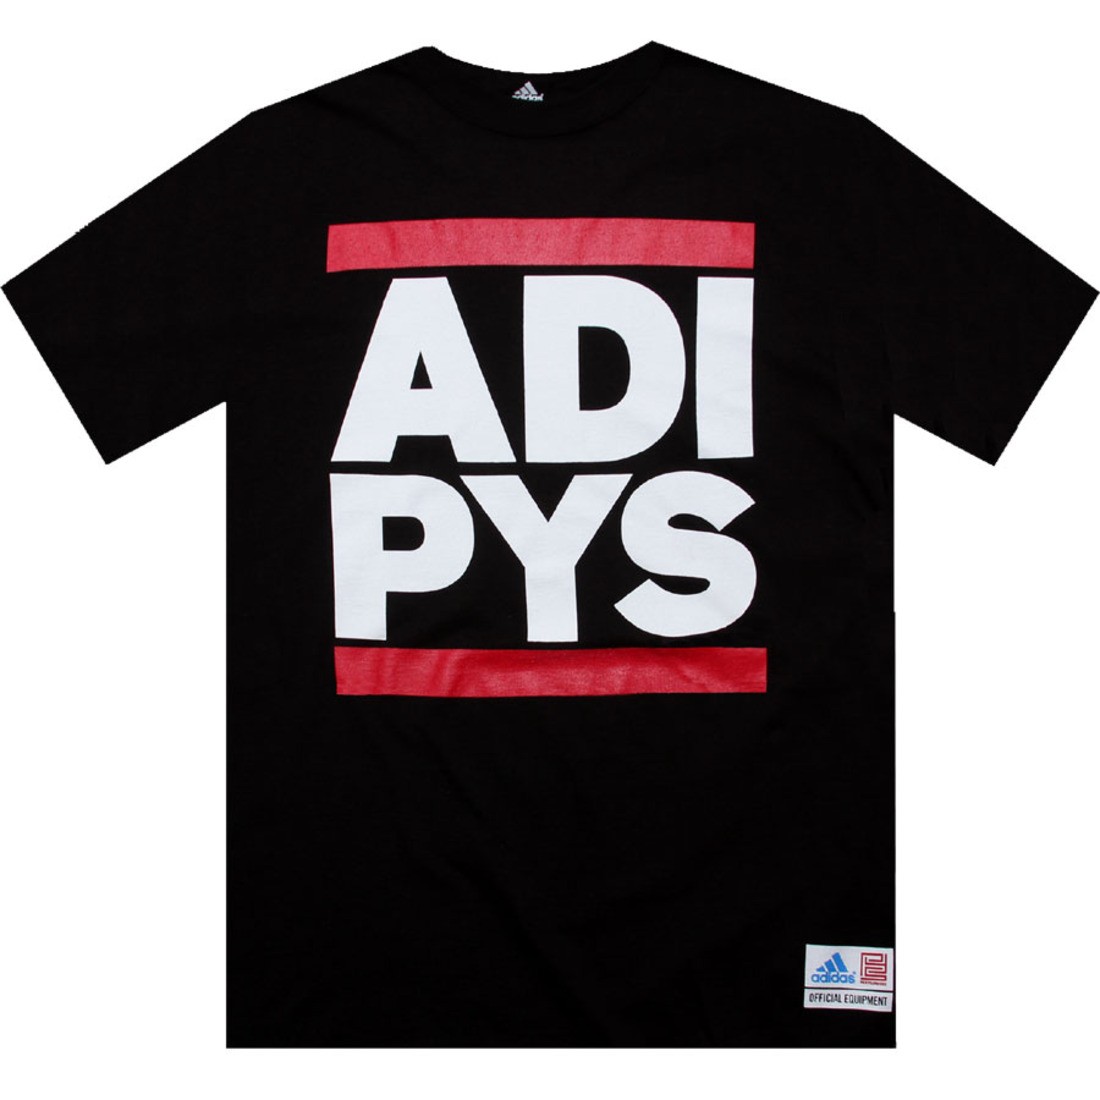 Adidas Adi PYS Tee DMC Run (black) shirt style